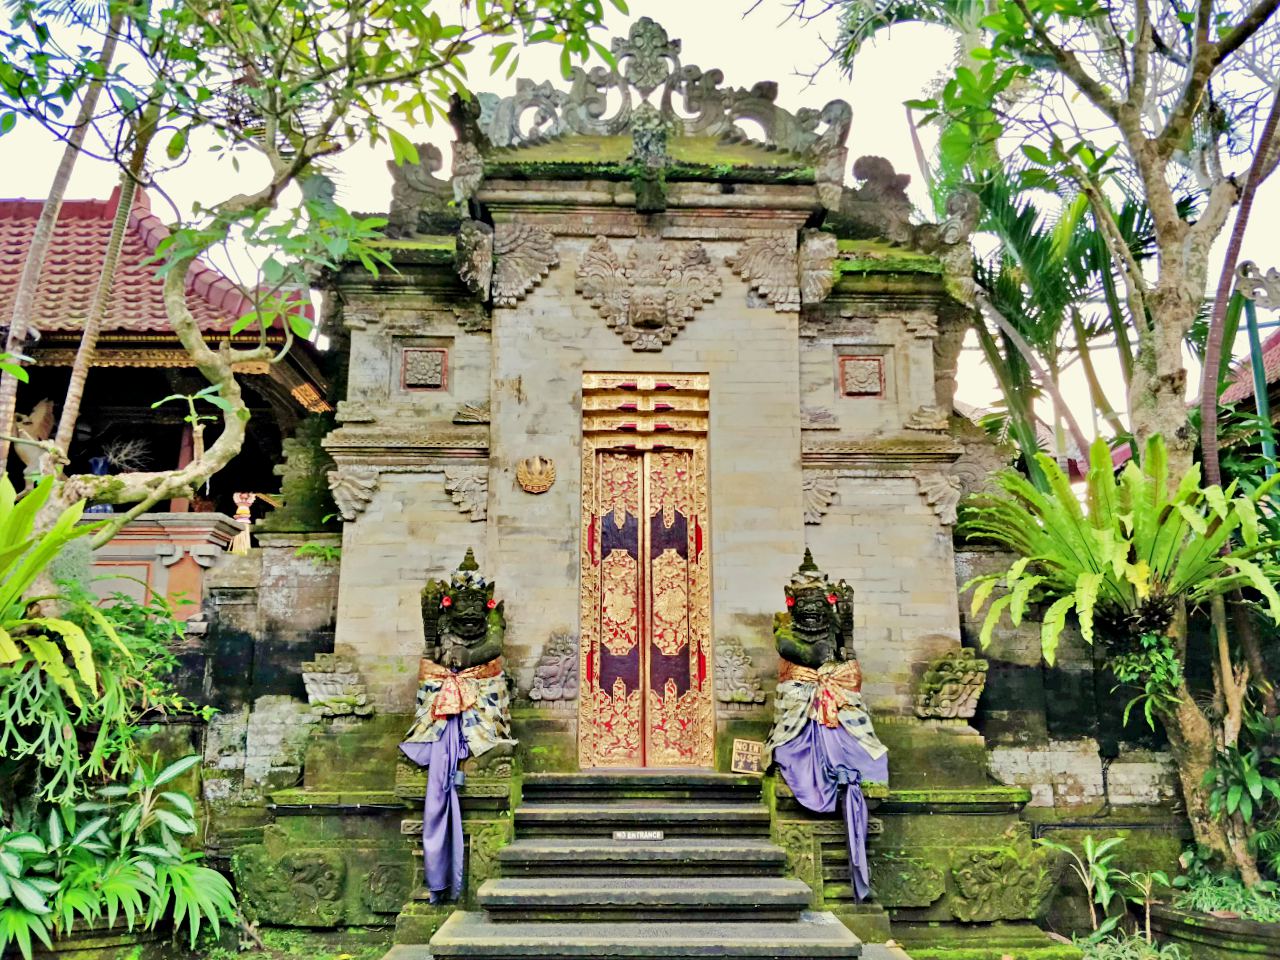 balinese entrance gate